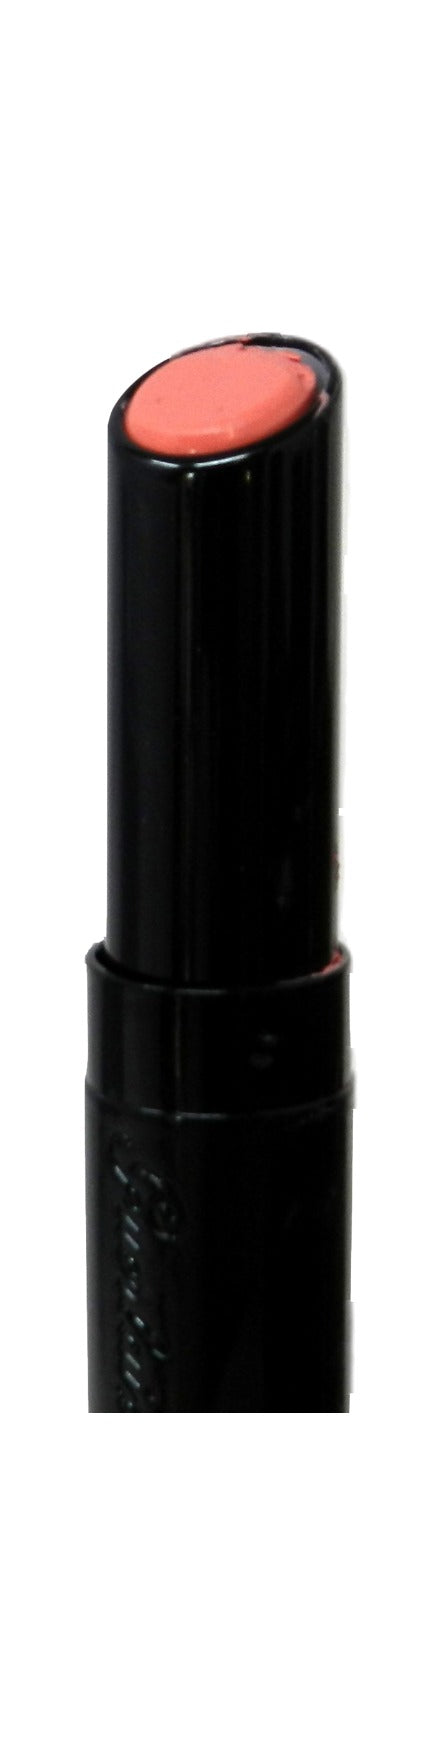 Guerlain, La Petite Robe Noire Deliciously Shiny Lip Colour